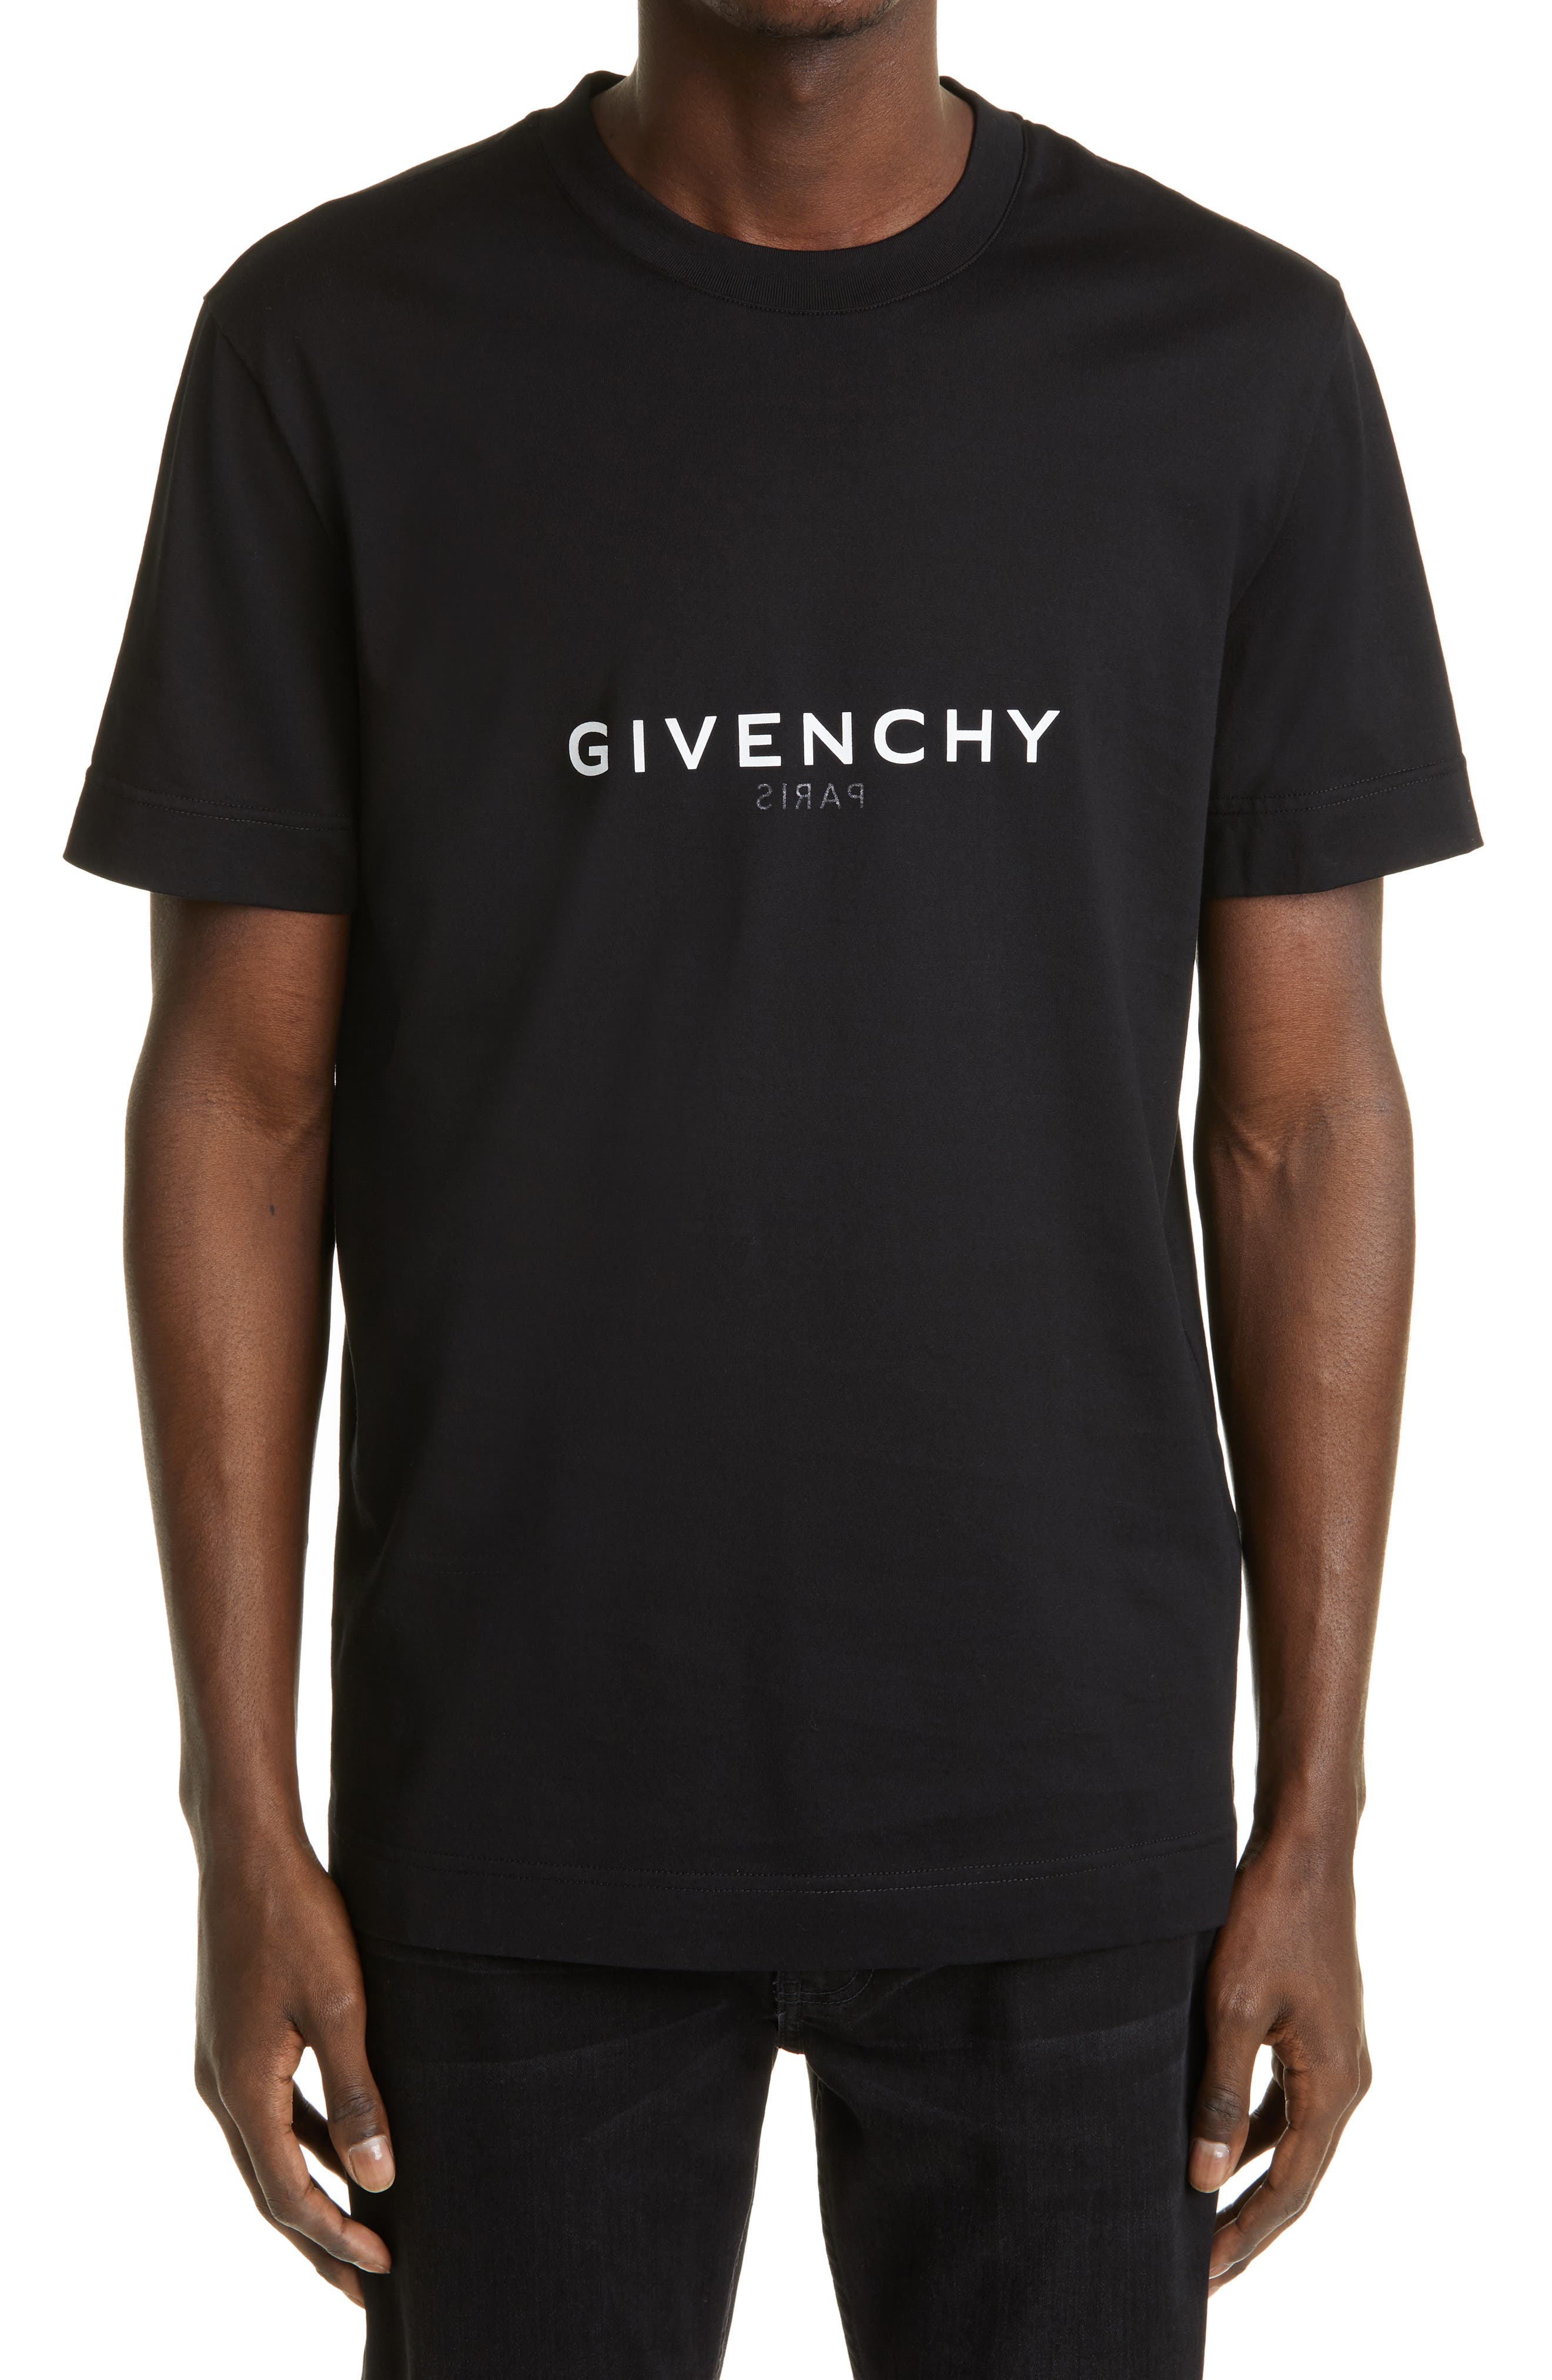 T-shirt GIVENCHY 5 XXL Men Clothing Givenchy Men T-shirts & Polos Givenchy Men T-shirts Givenchy Men white T-shirts Givenchy Men 